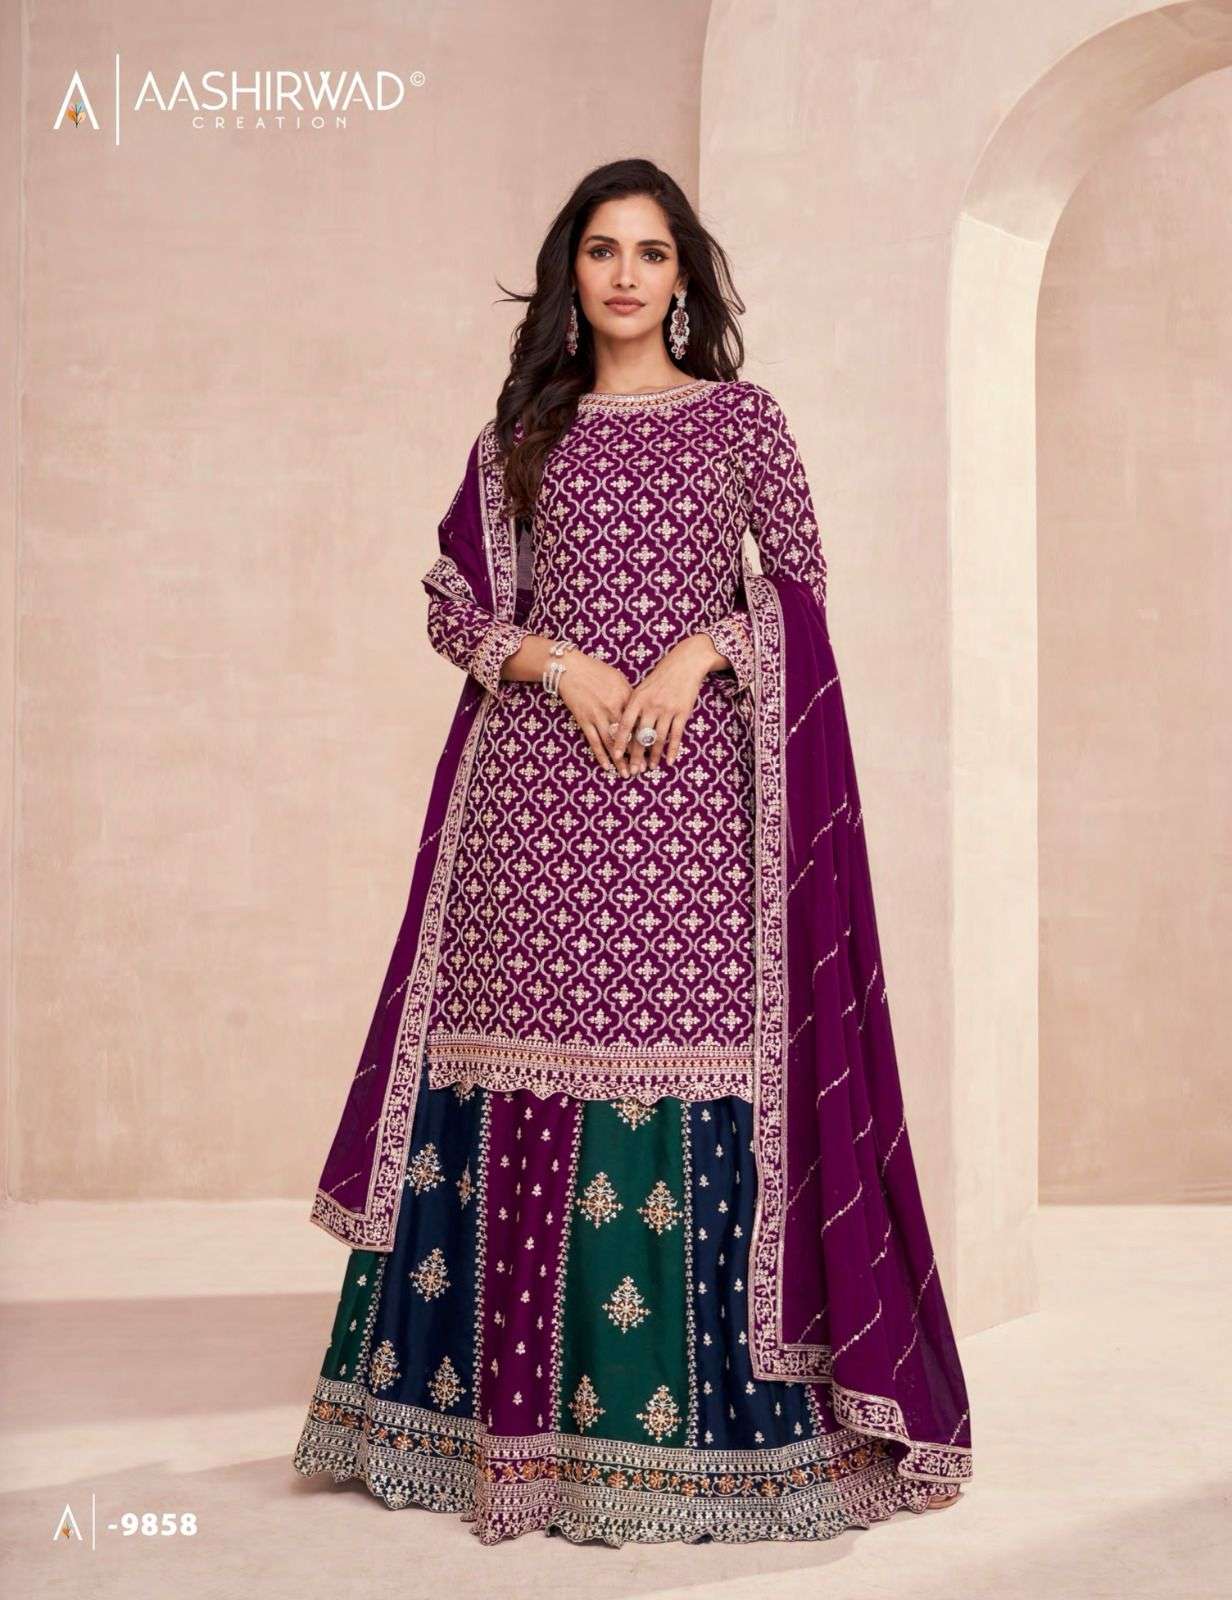 Aashirwad Colors Fruti And Dark Edition Designer Lehenga Style Dress Online Collection